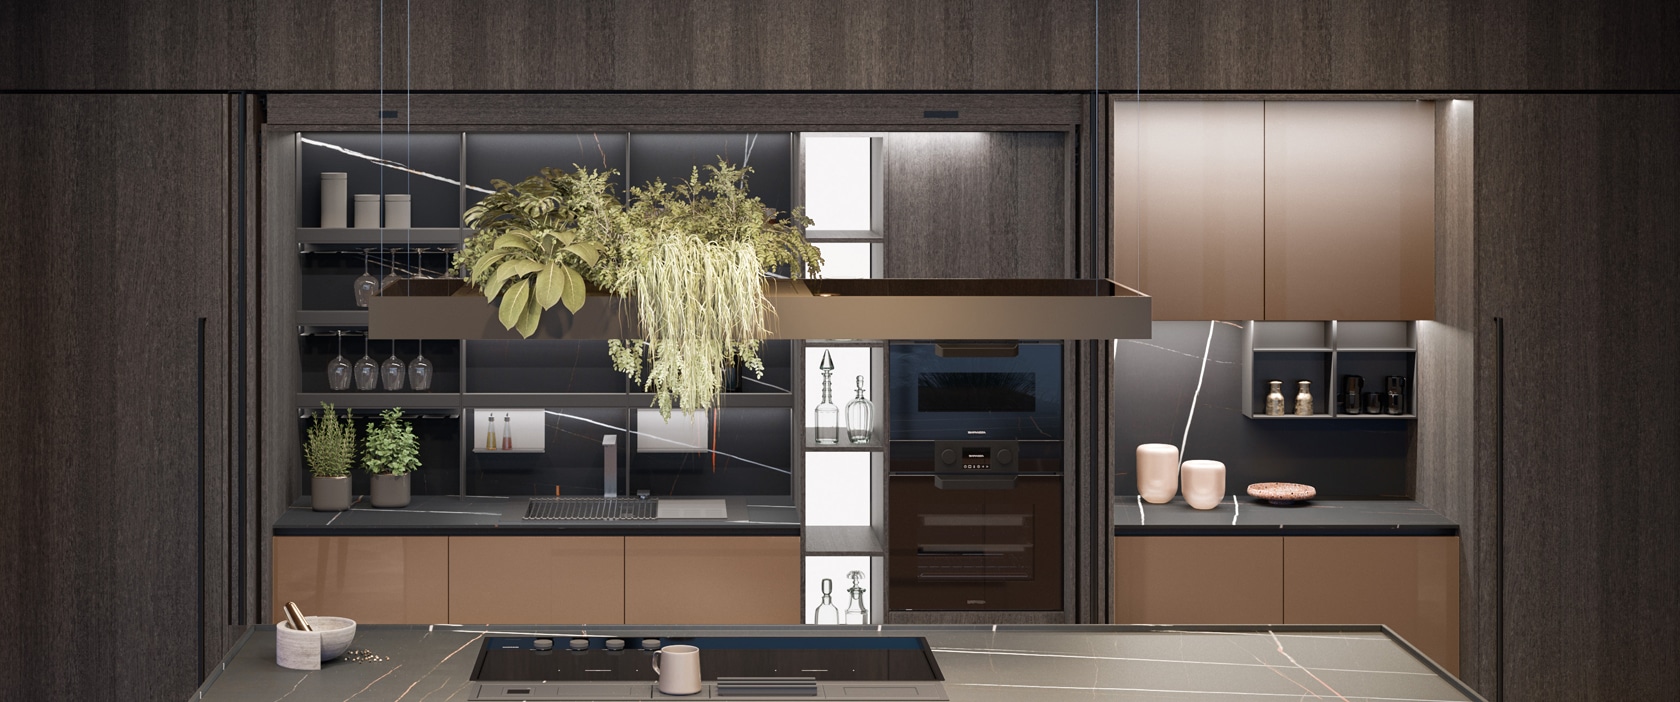 Large luxury kitchen with functional workstation hidden behind pocket doors